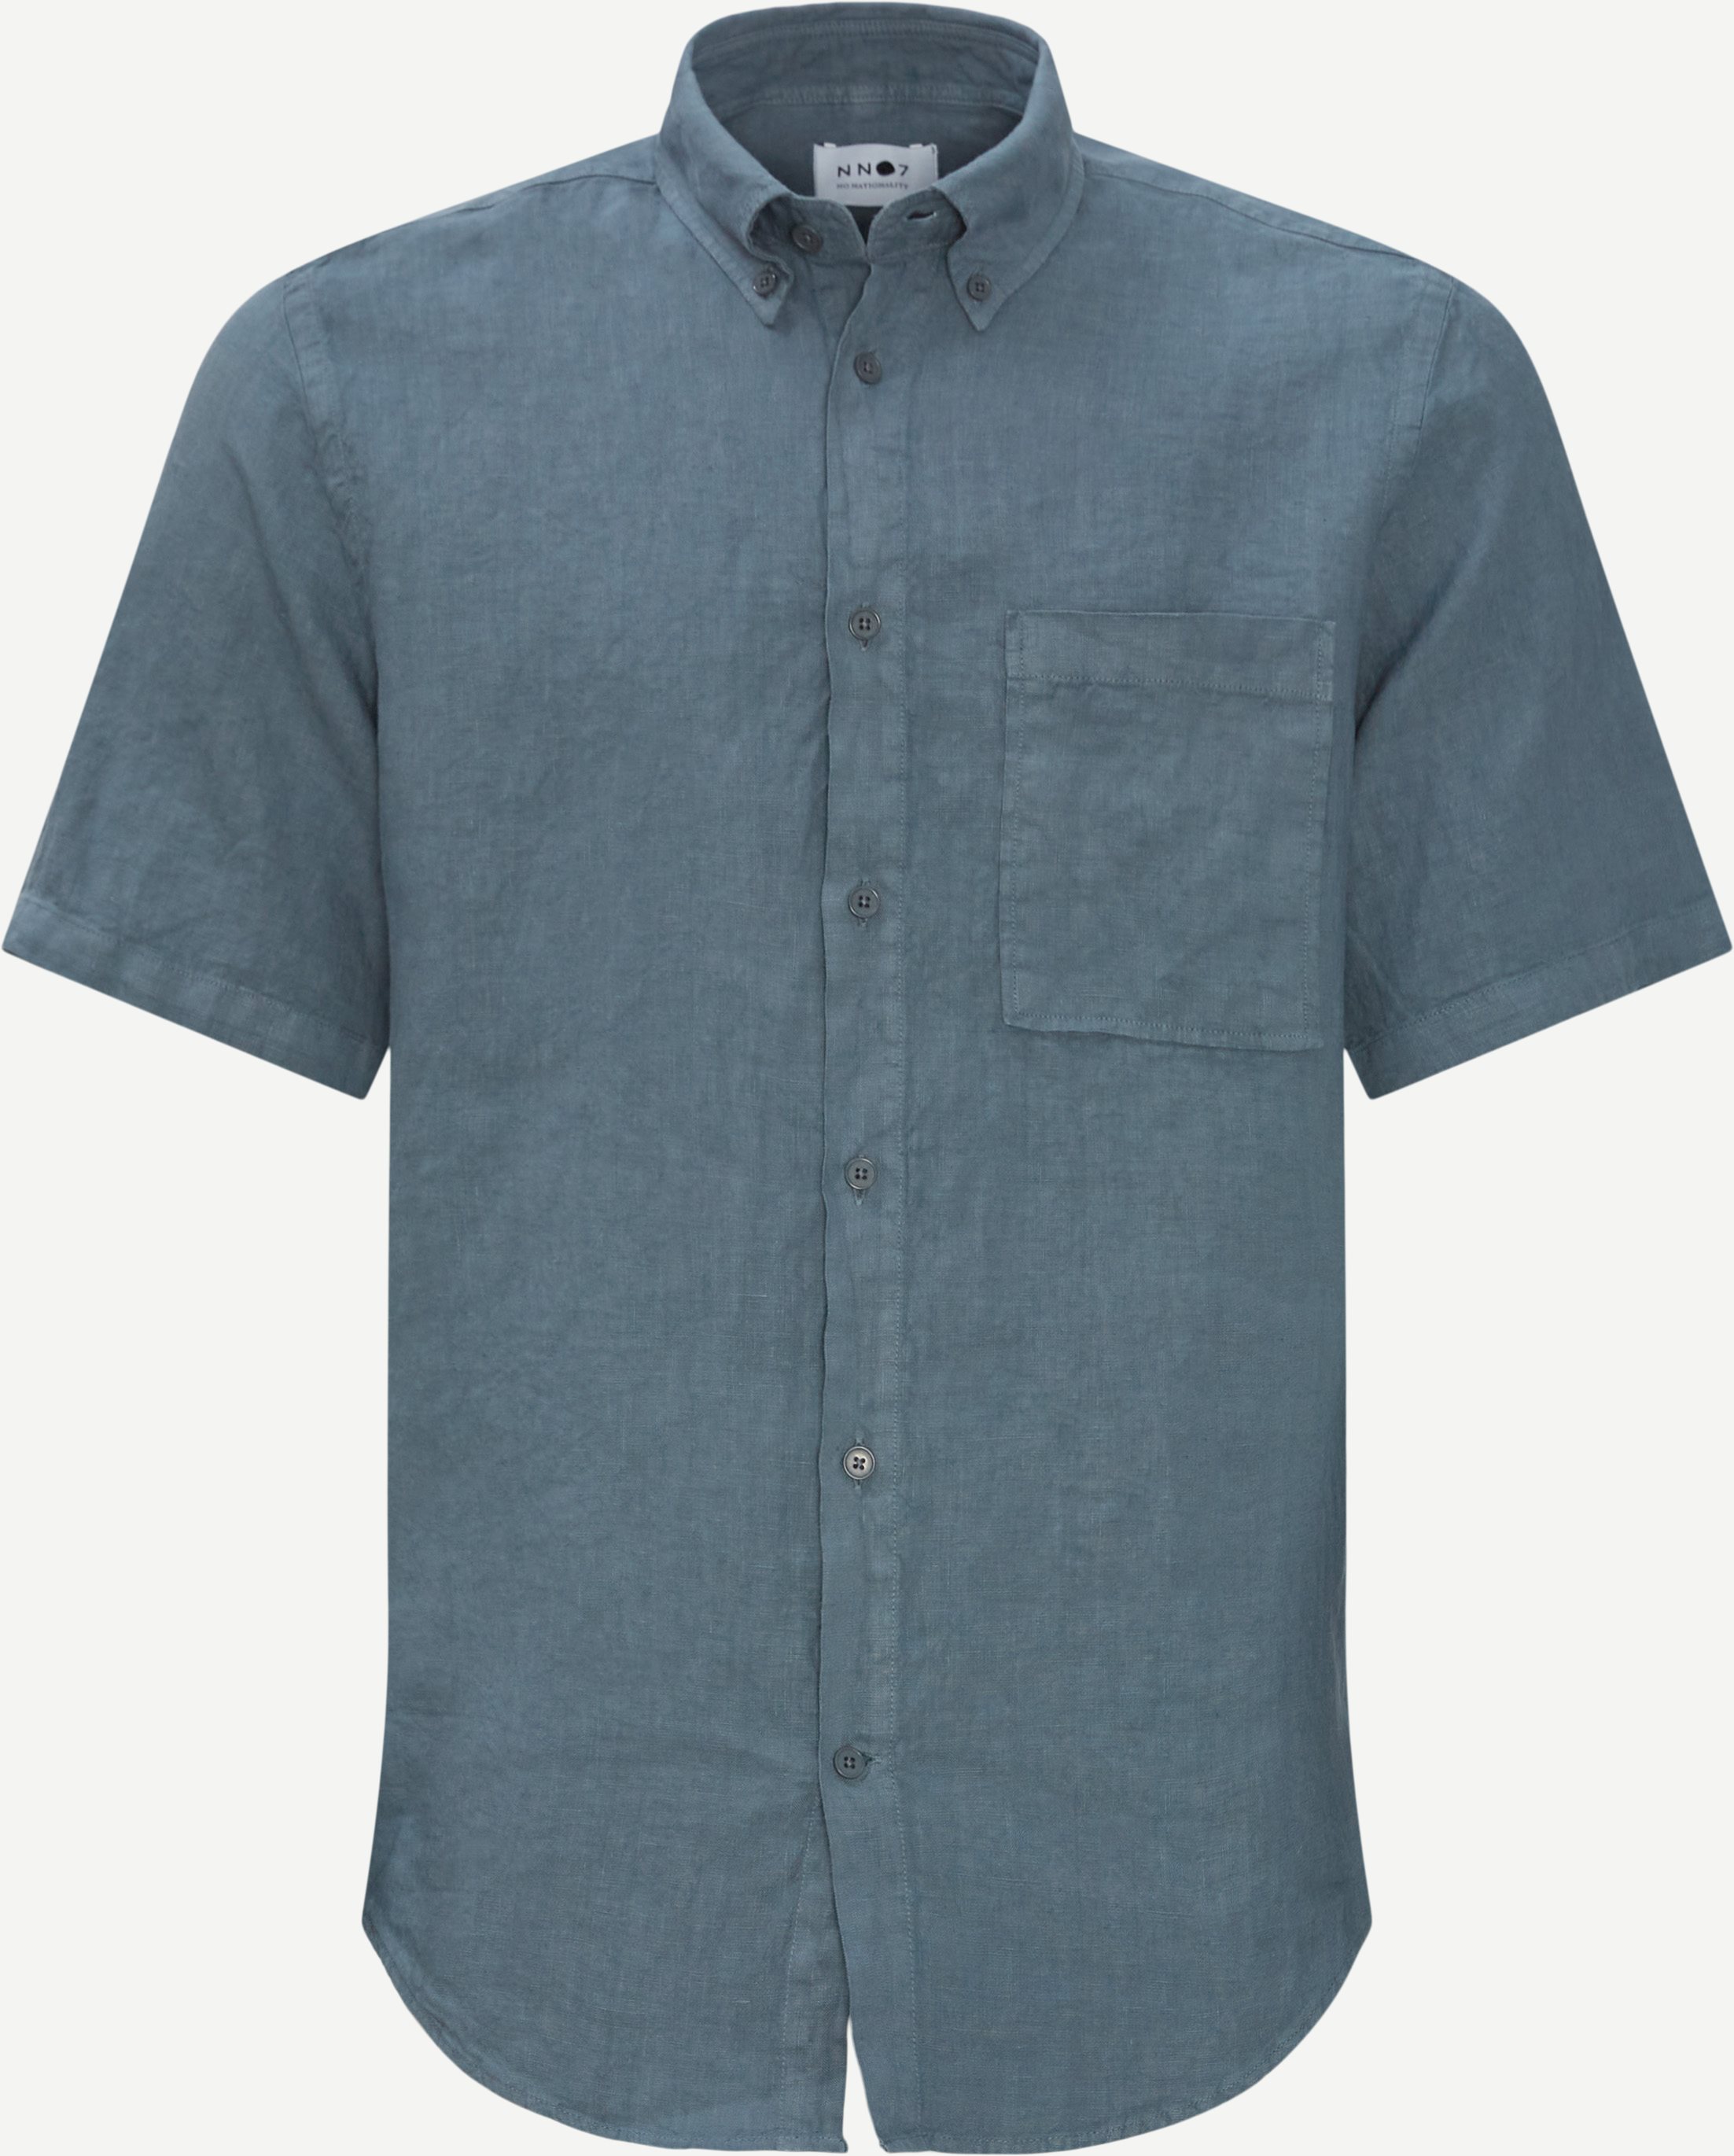 NN07 Short-sleeved shirts 5706 ARNE SS Blue